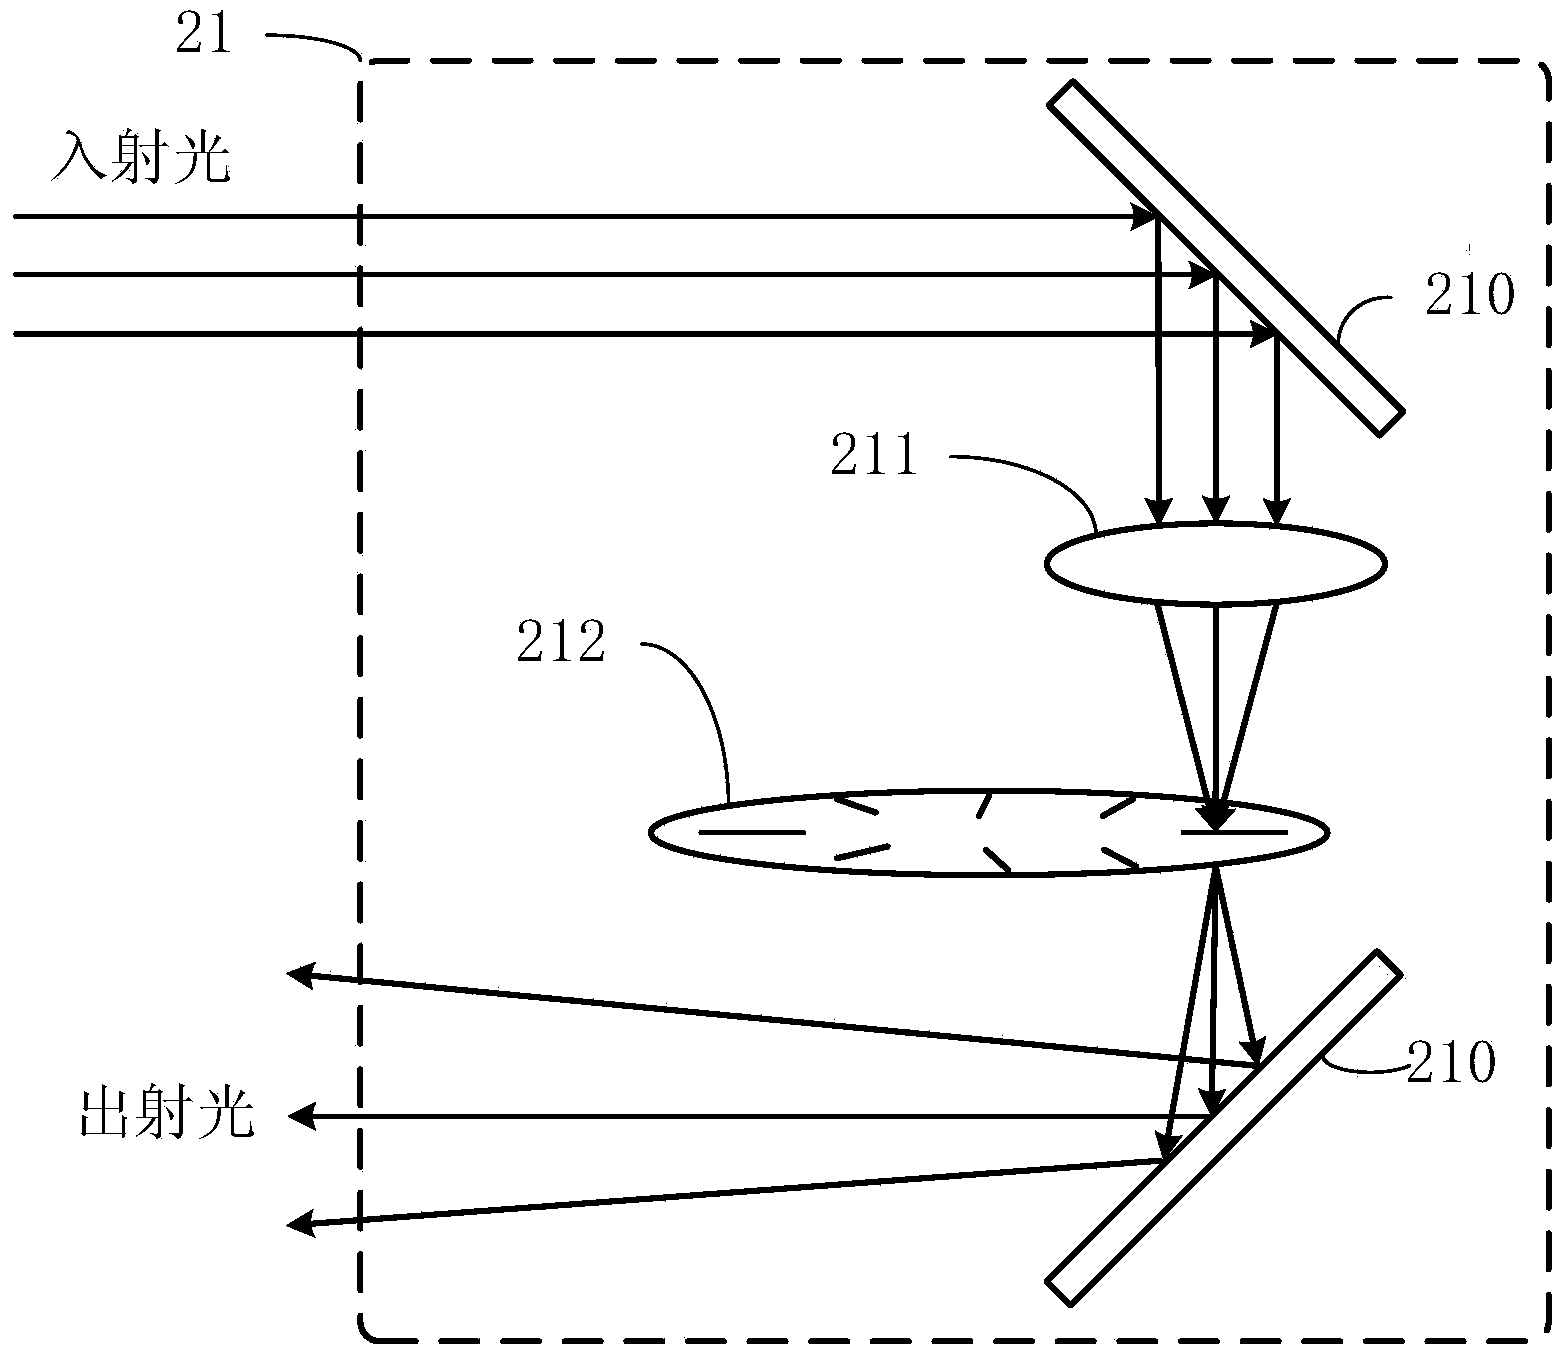 Optical grating rotary light splitting device and method for optical wedge delay polarization elimination